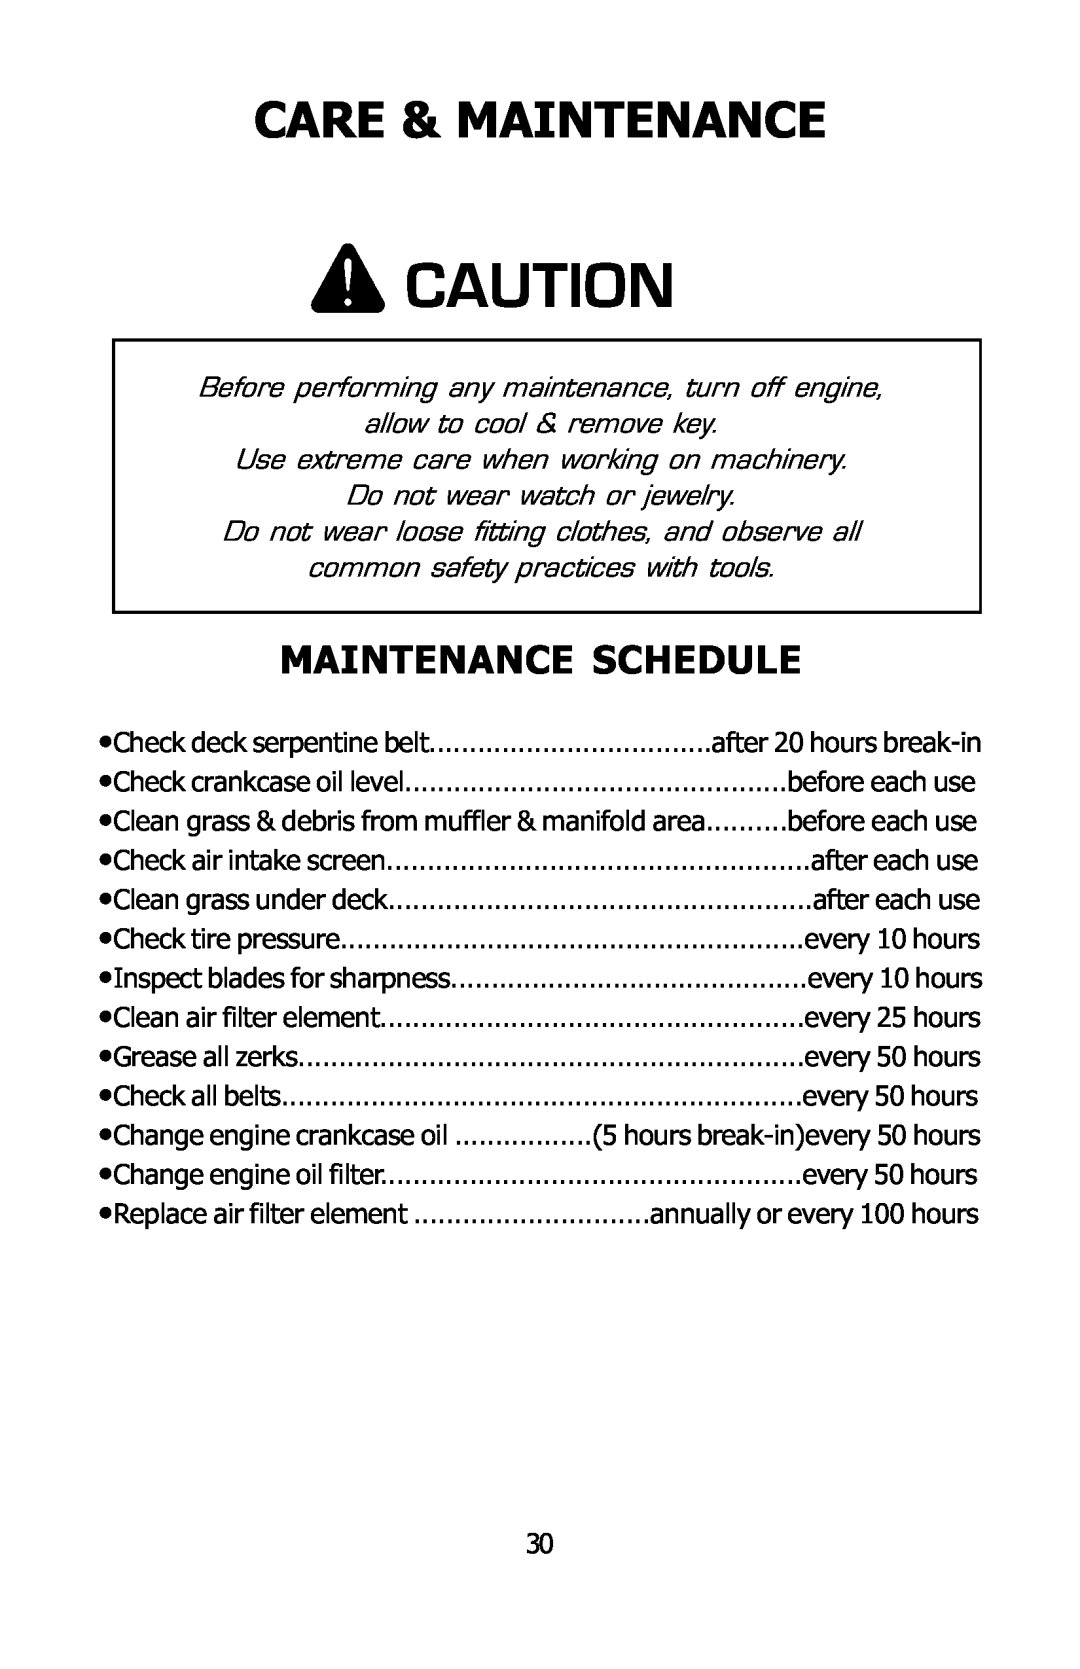 Dixon 16134-0803 manual Care & Maintenance, Maintenance Schedule 